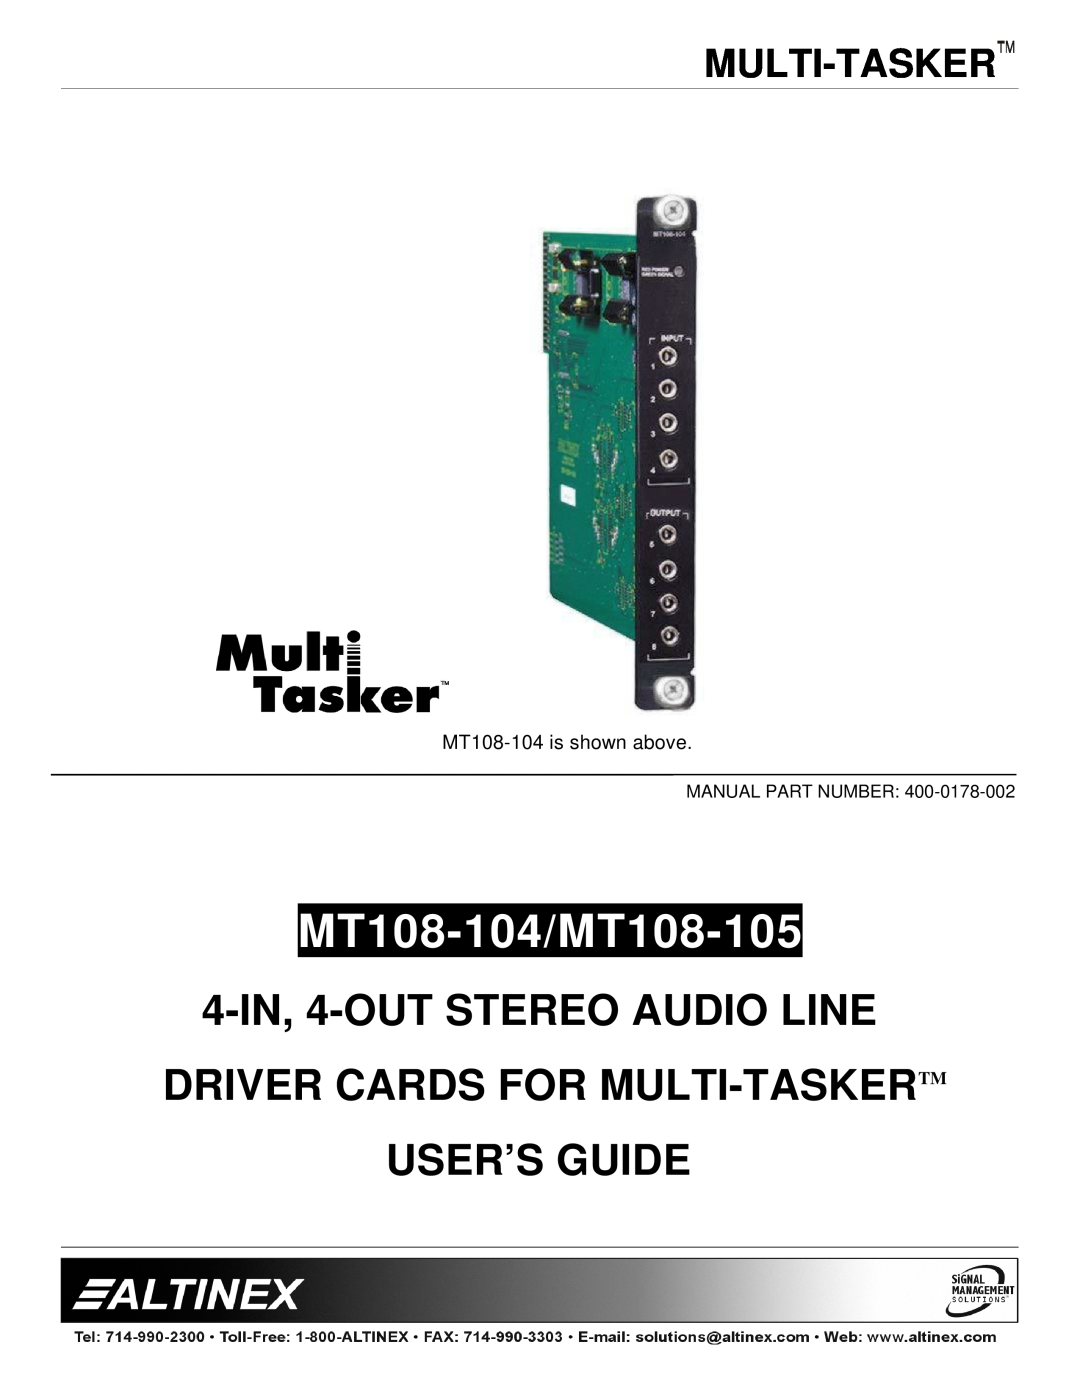 Altinex manual Multi-Tasker, MT108-104/MT108-105, 4-IN, 4-OUT STEREO AUDIO LINE DRIVER CARDS FOR MULTI-TASKERTM 